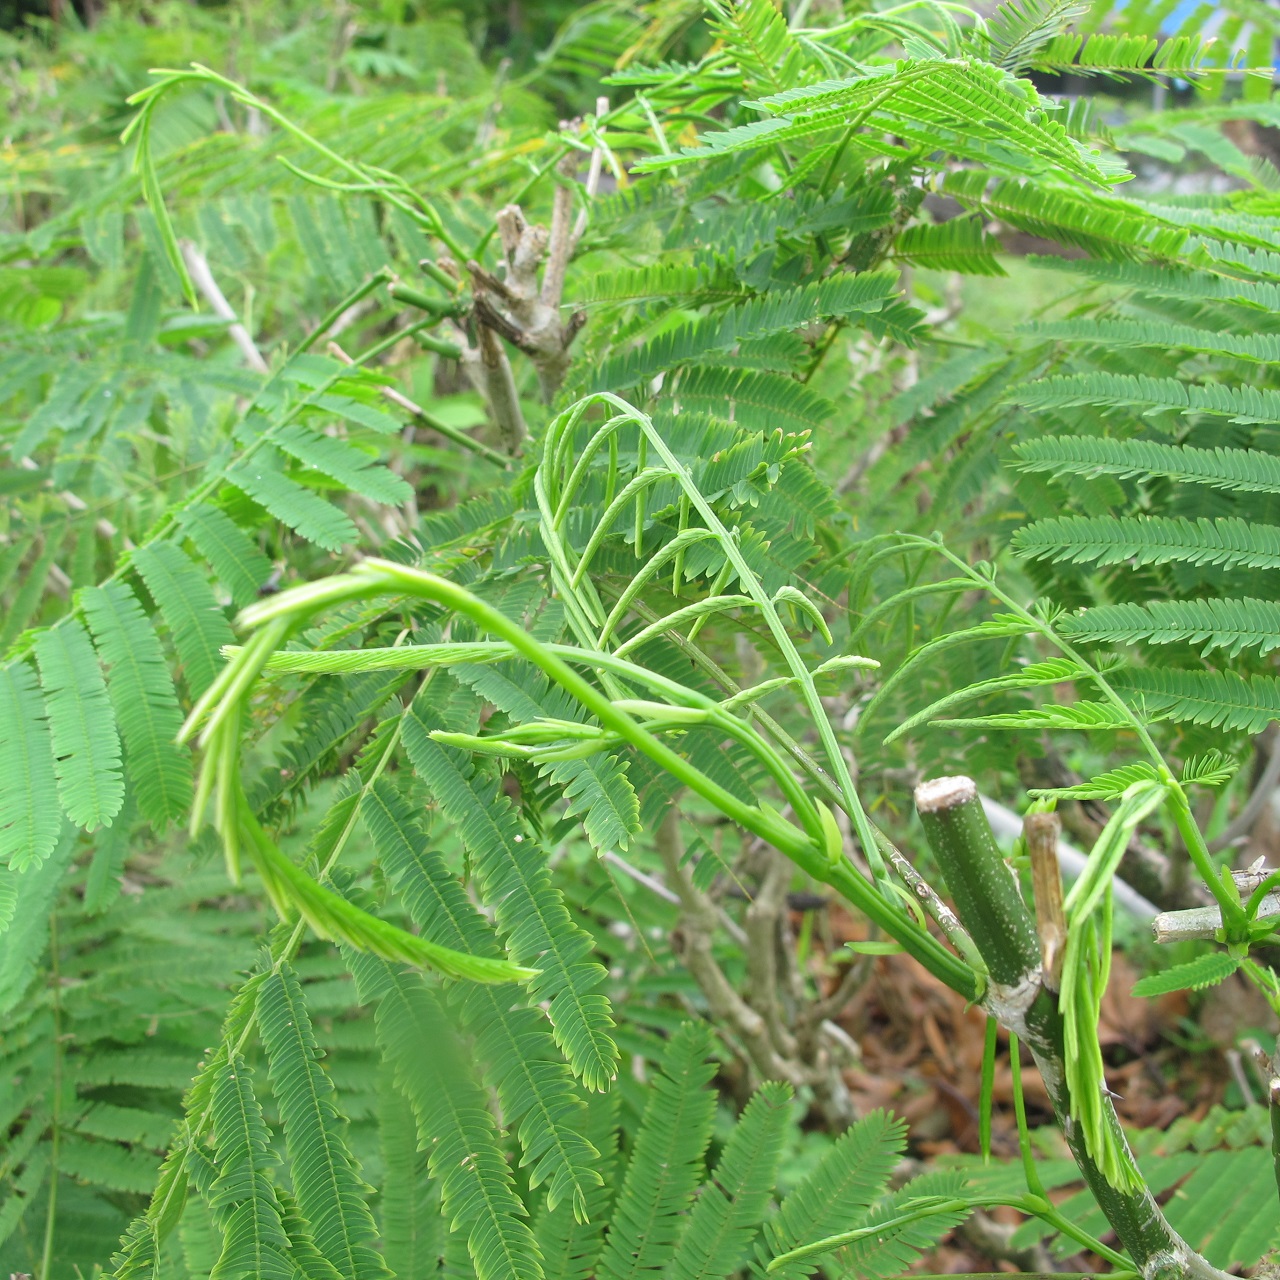 Acacia plant.